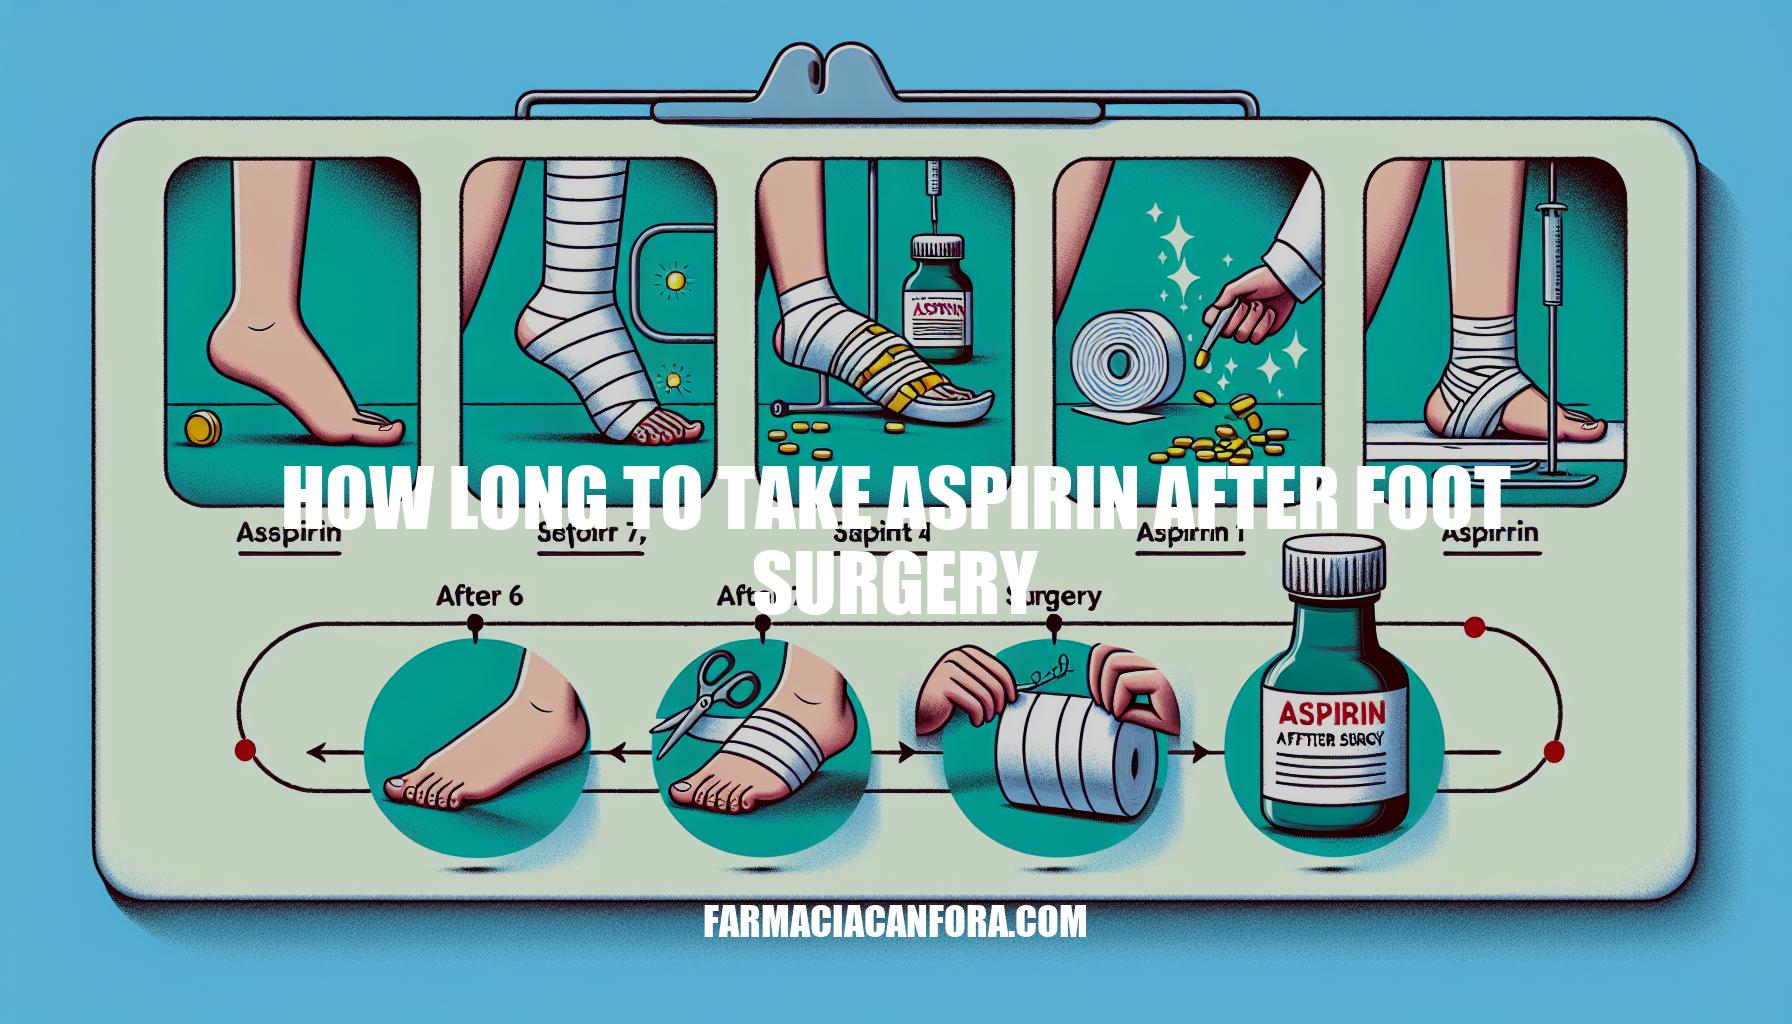 How Long to Take Aspirin After Foot Surgery